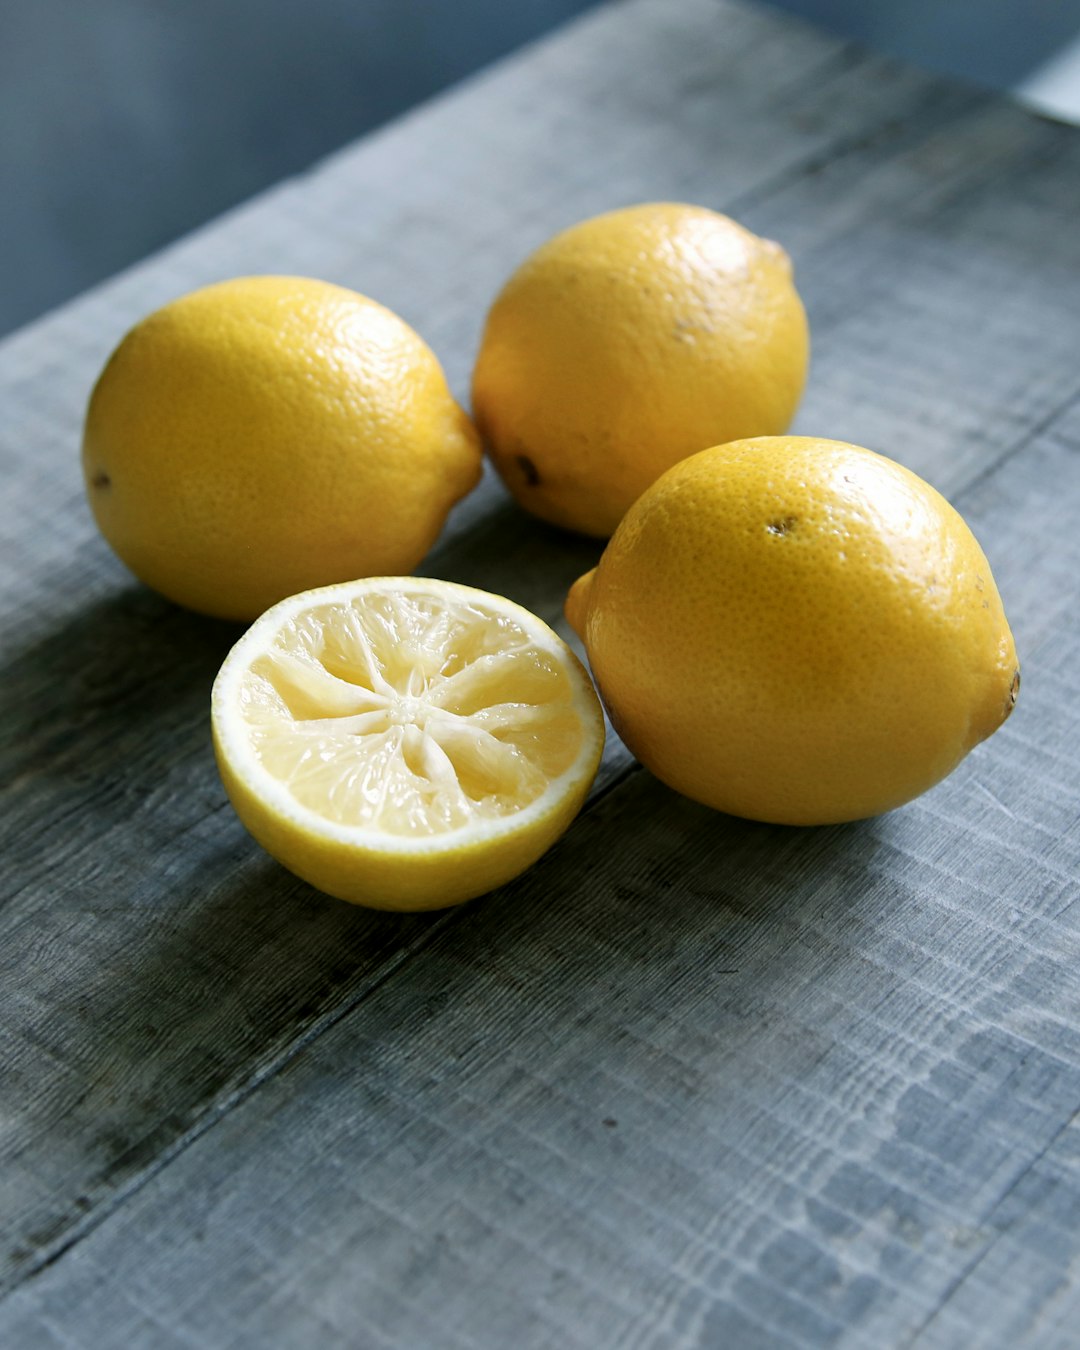 3.5 lemons